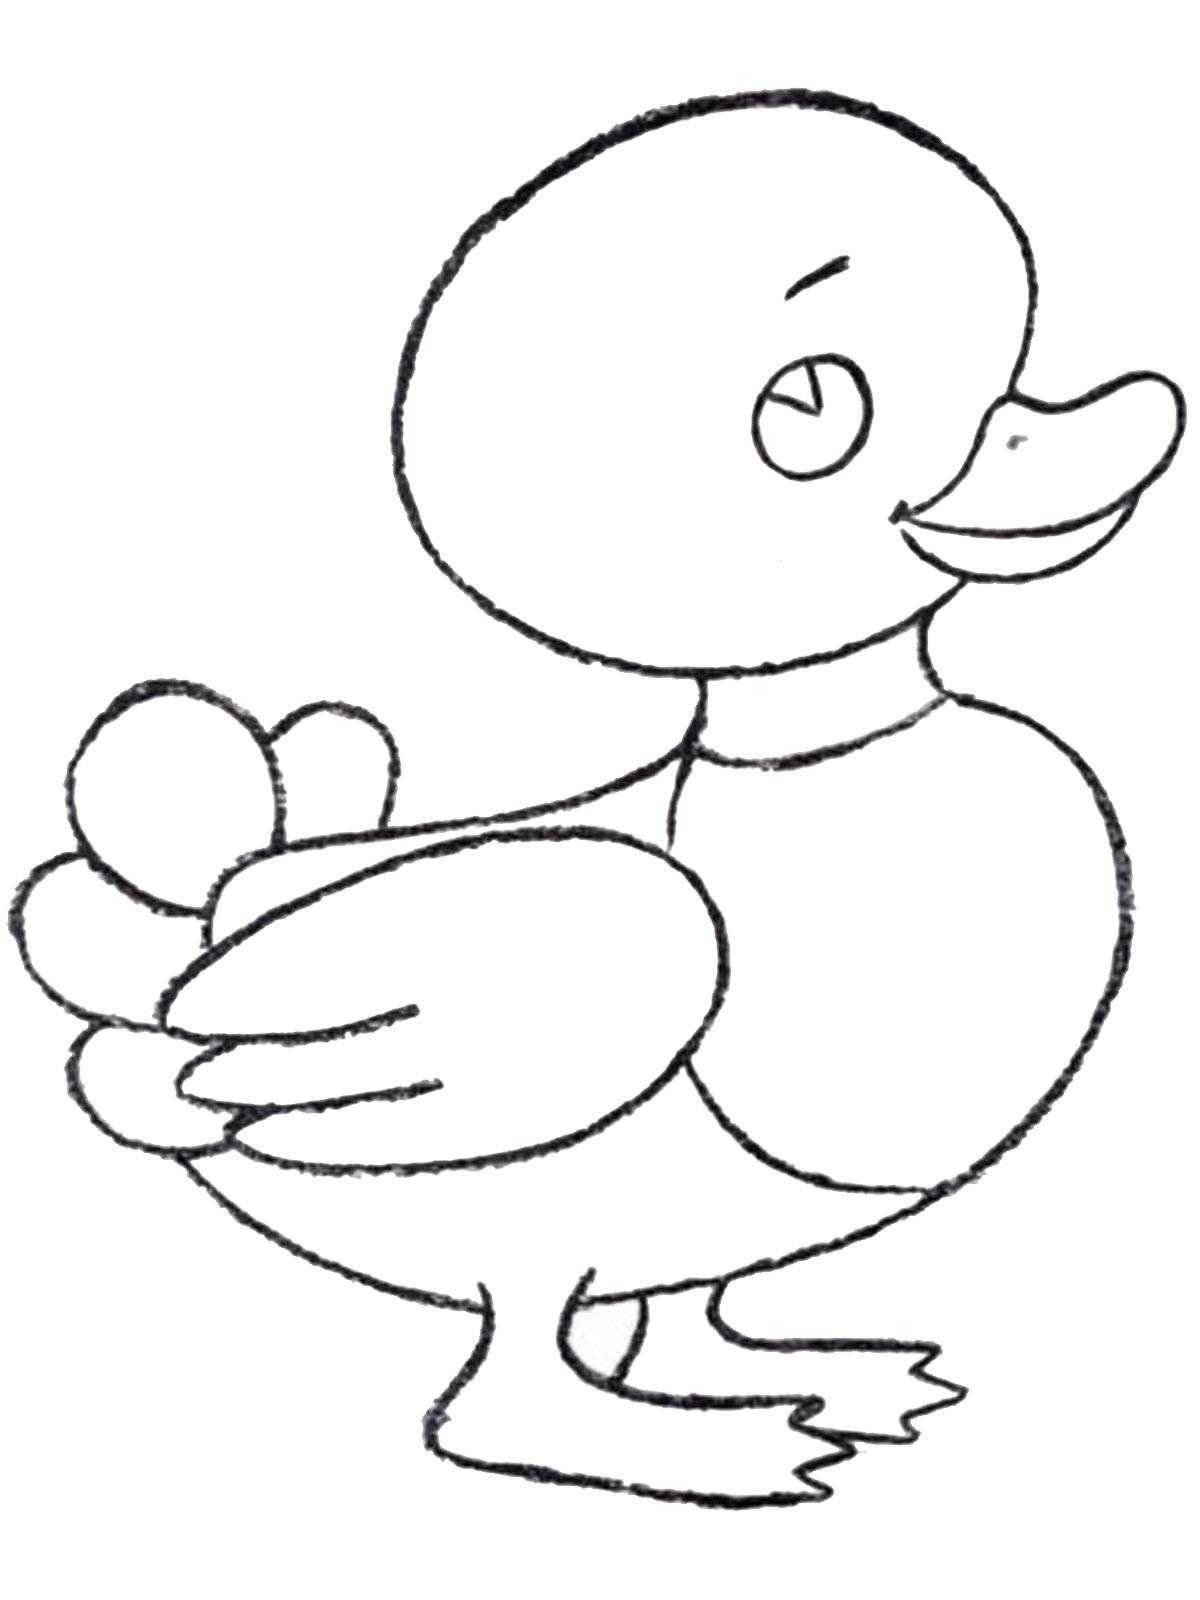 Duck plush coloring book